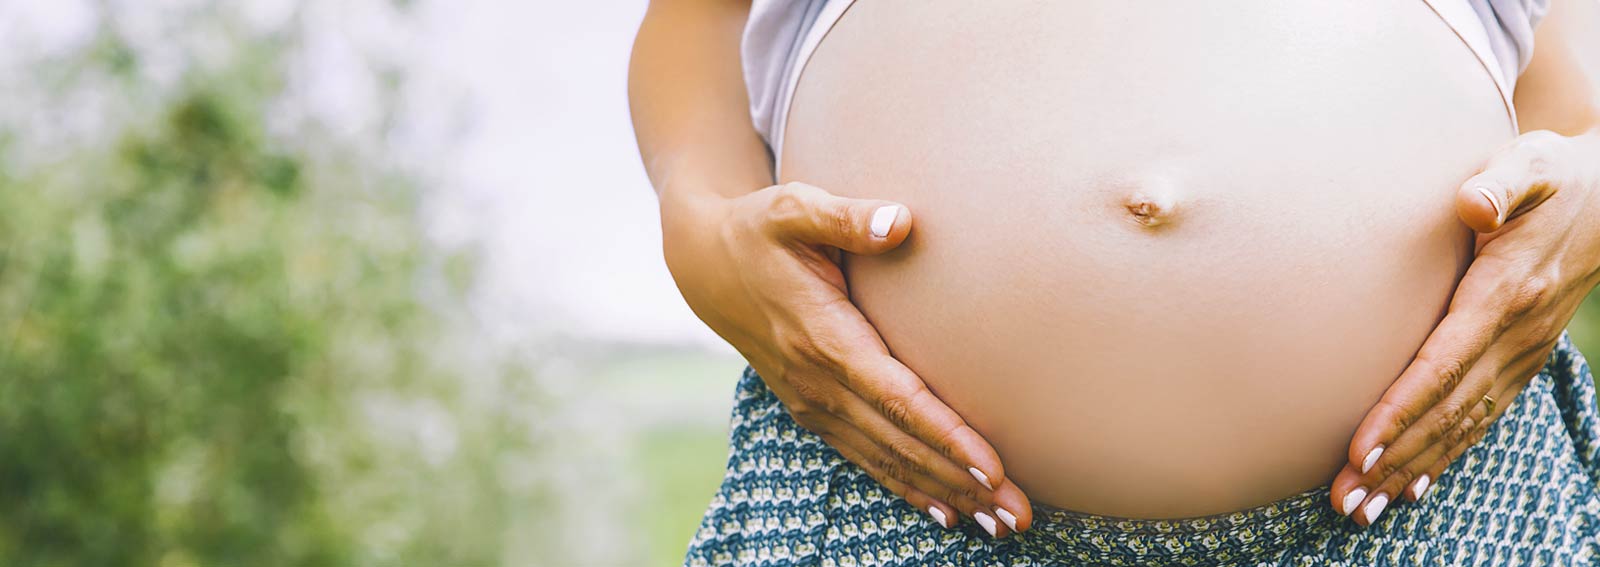 Pregnancy Care | Geisinger